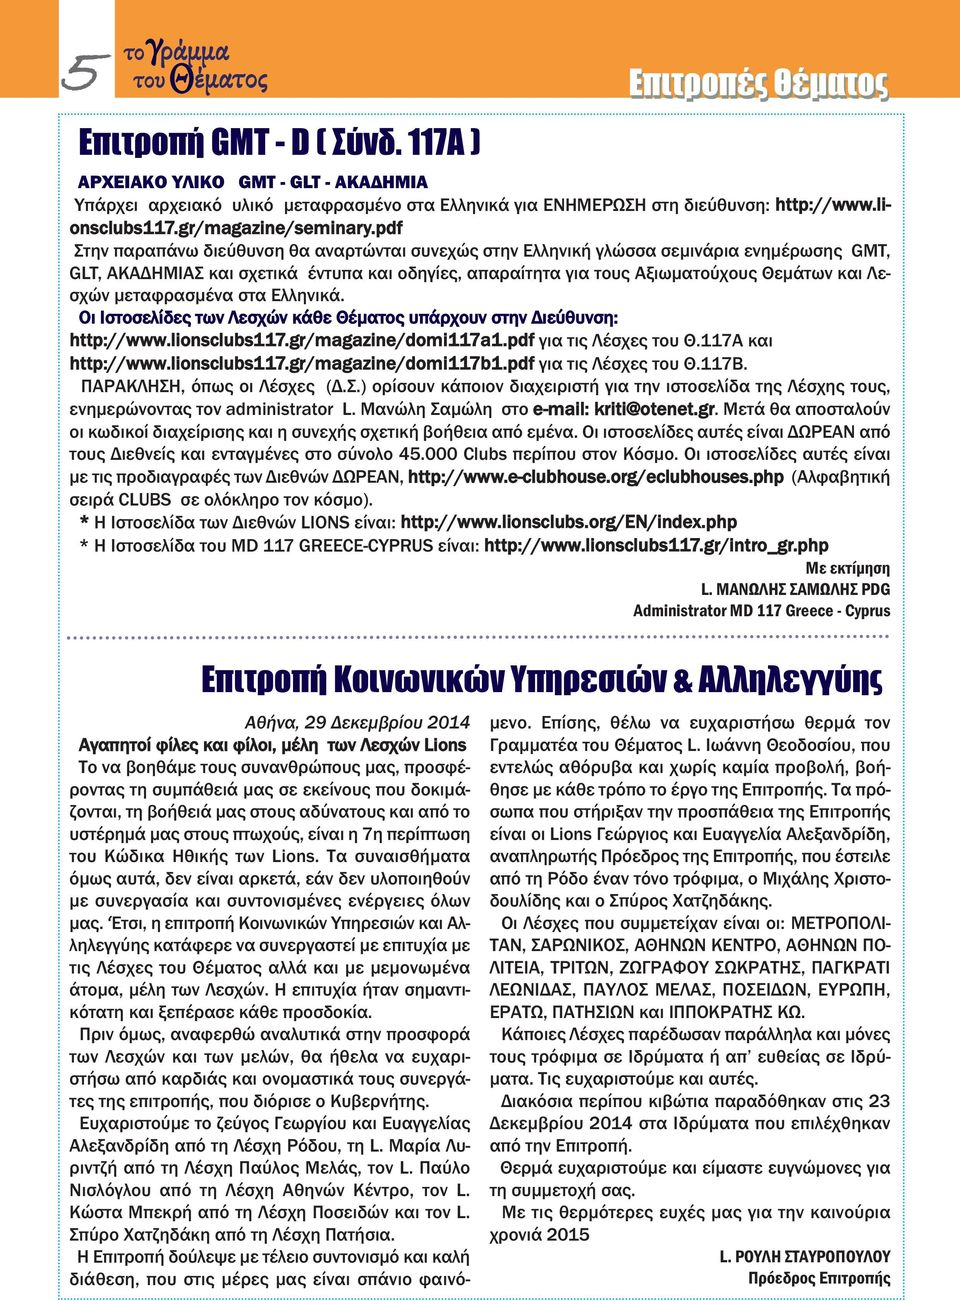 pdf Στην παραπάνω διεύθυνση θα αναρτώνται συνεχώς στην Ελληνική γλώσσα σεμινάρια ενημέρωσης GMT, GLT, ΑΚΑΔΗΜΙΑΣ και σχετικά έντυπα και οδηγίες, απαραίτητα για τους Αξιωματούχους Θεμάτων και Λεσχών